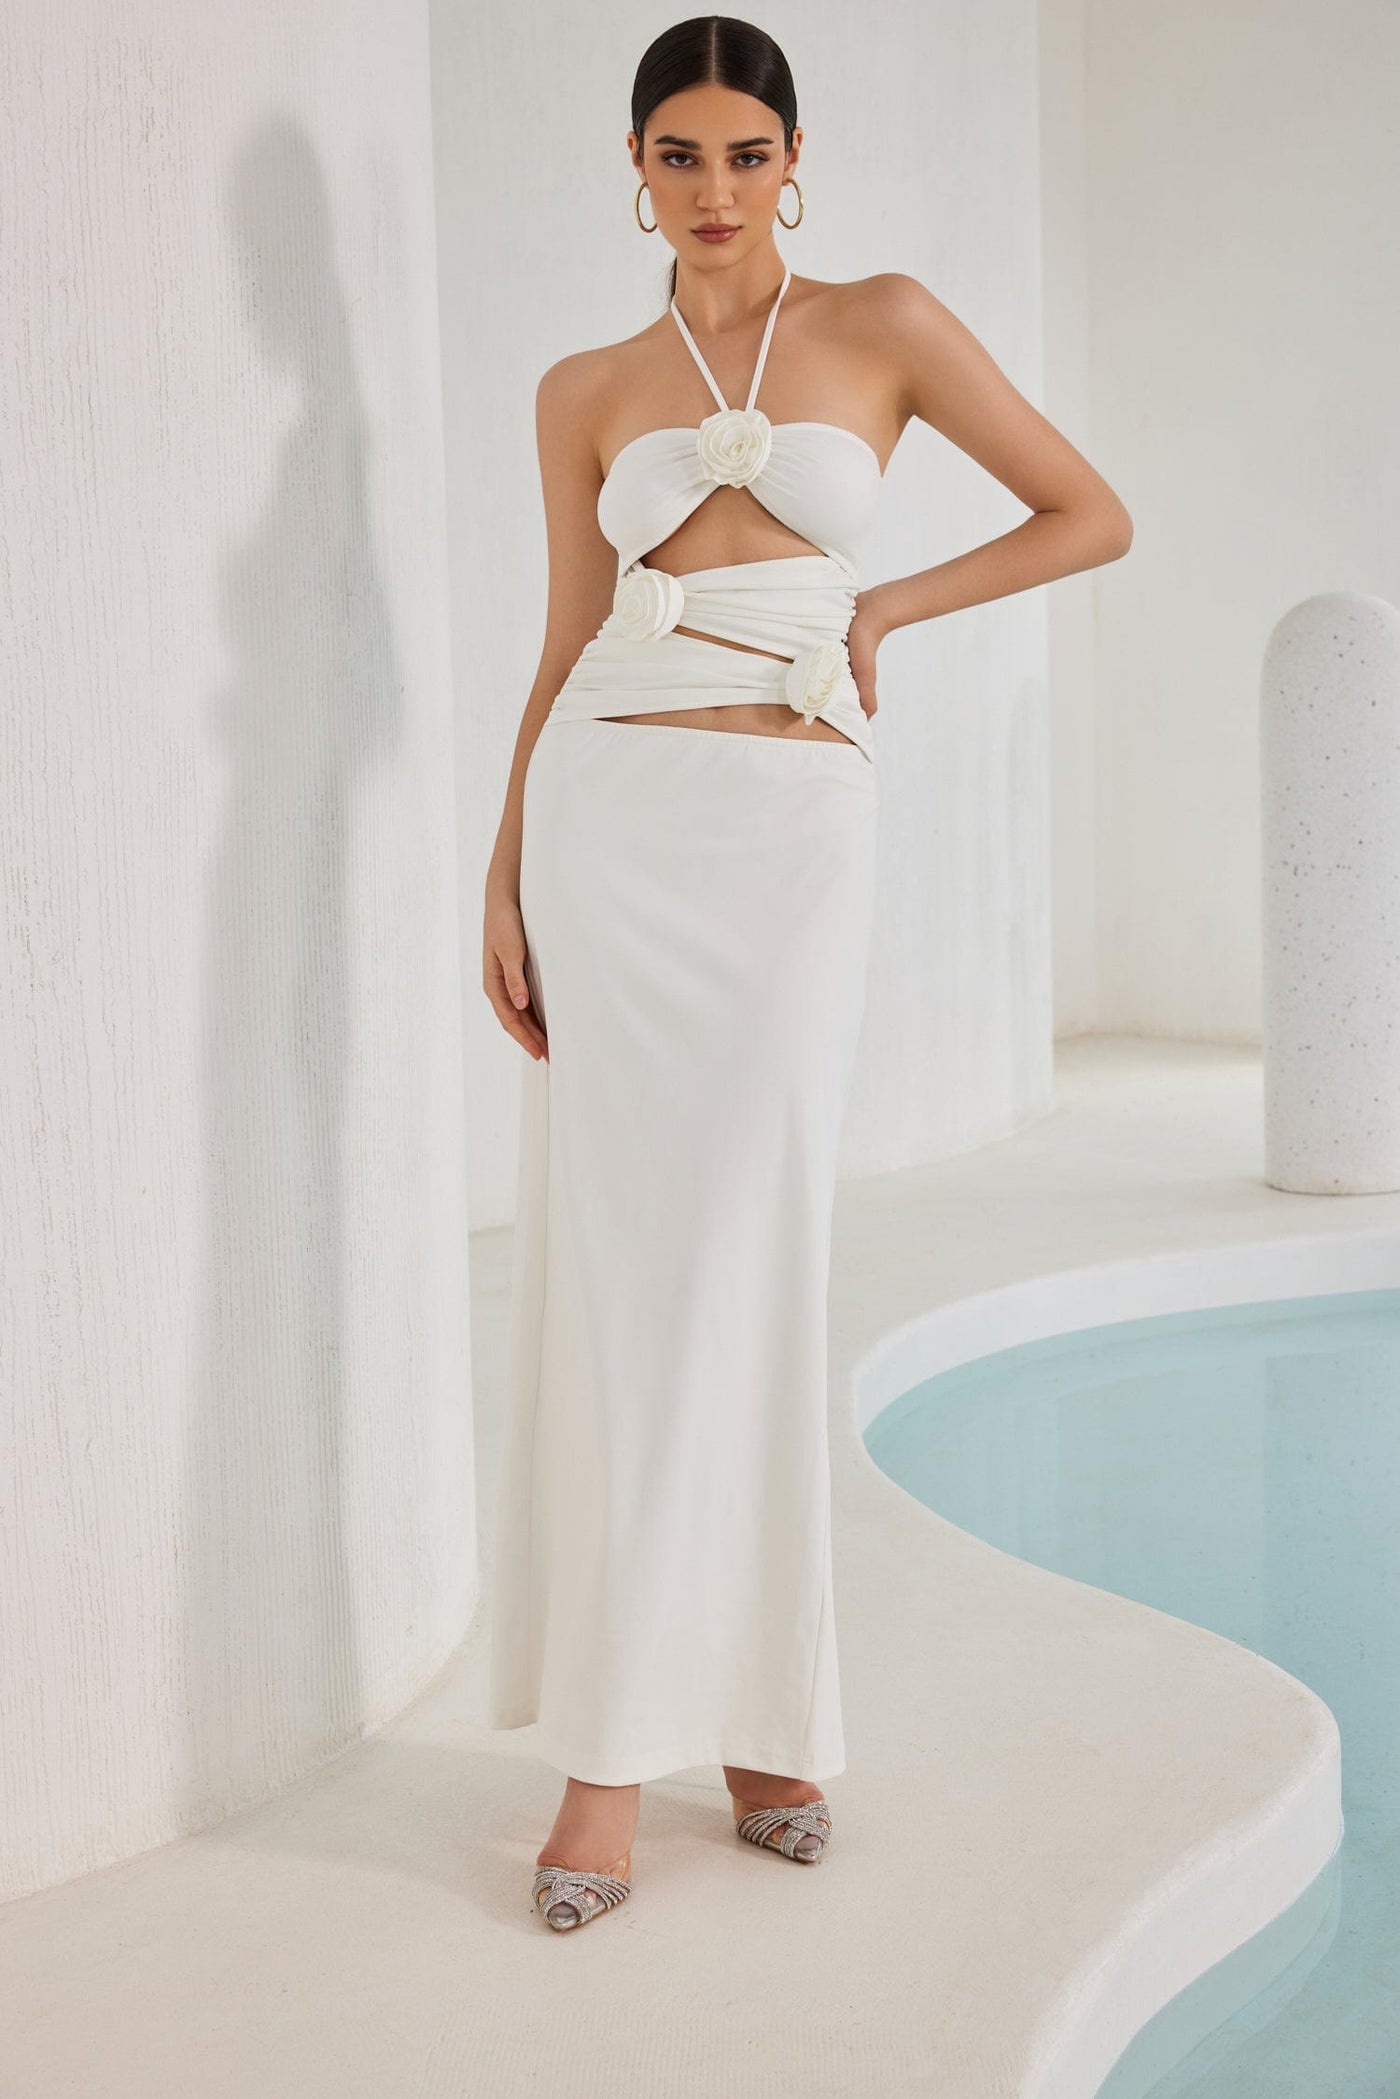 Klena Floral Maxi Dress - White